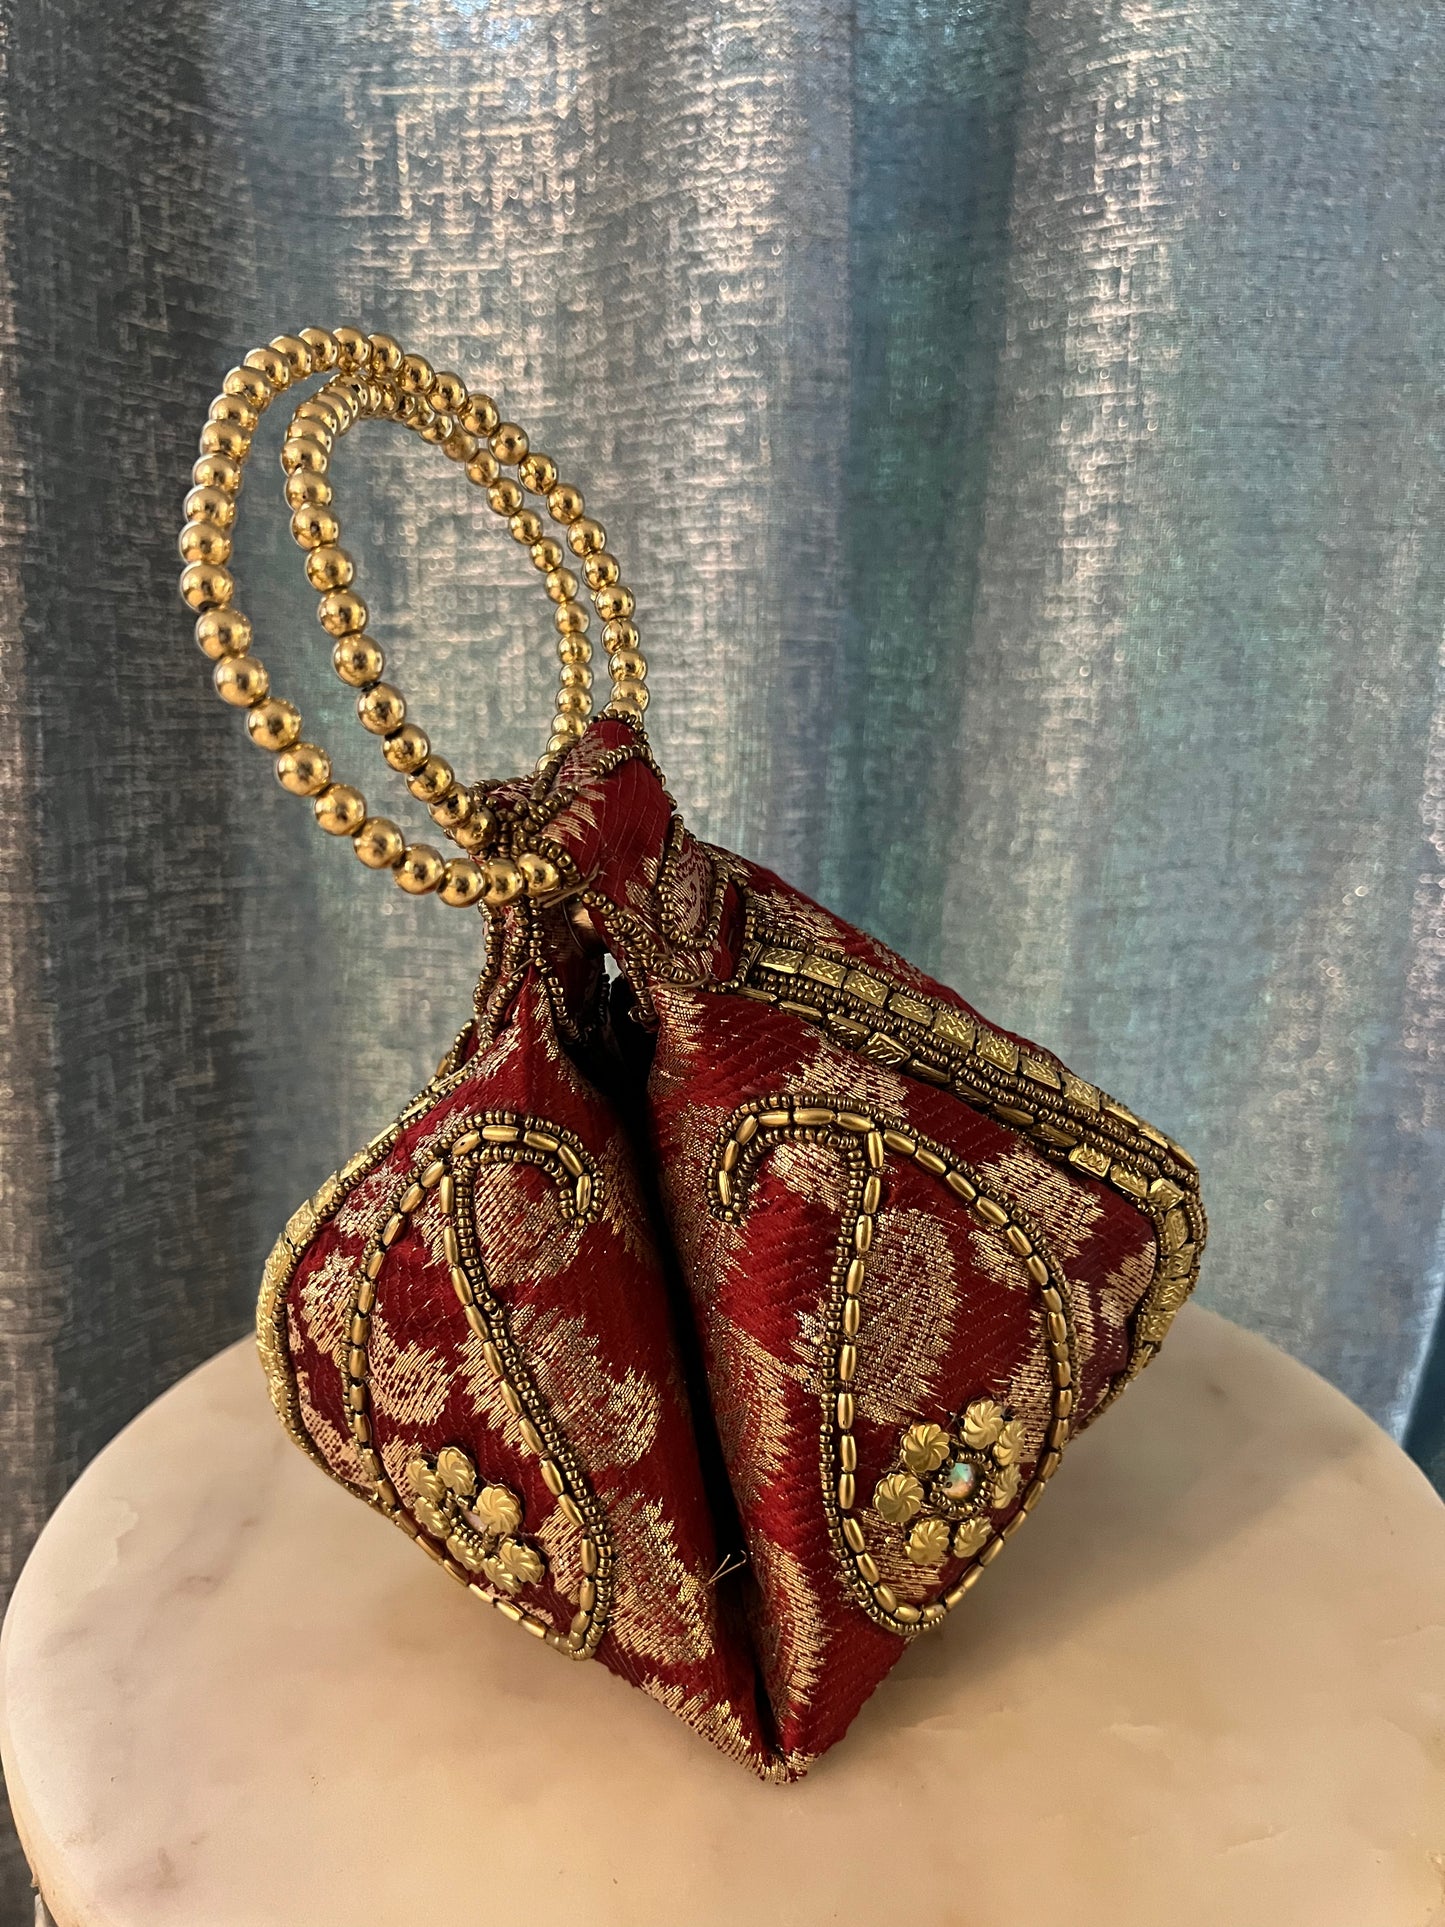 Jeweled Fortune Cookie Wrist Bag (Dubai)